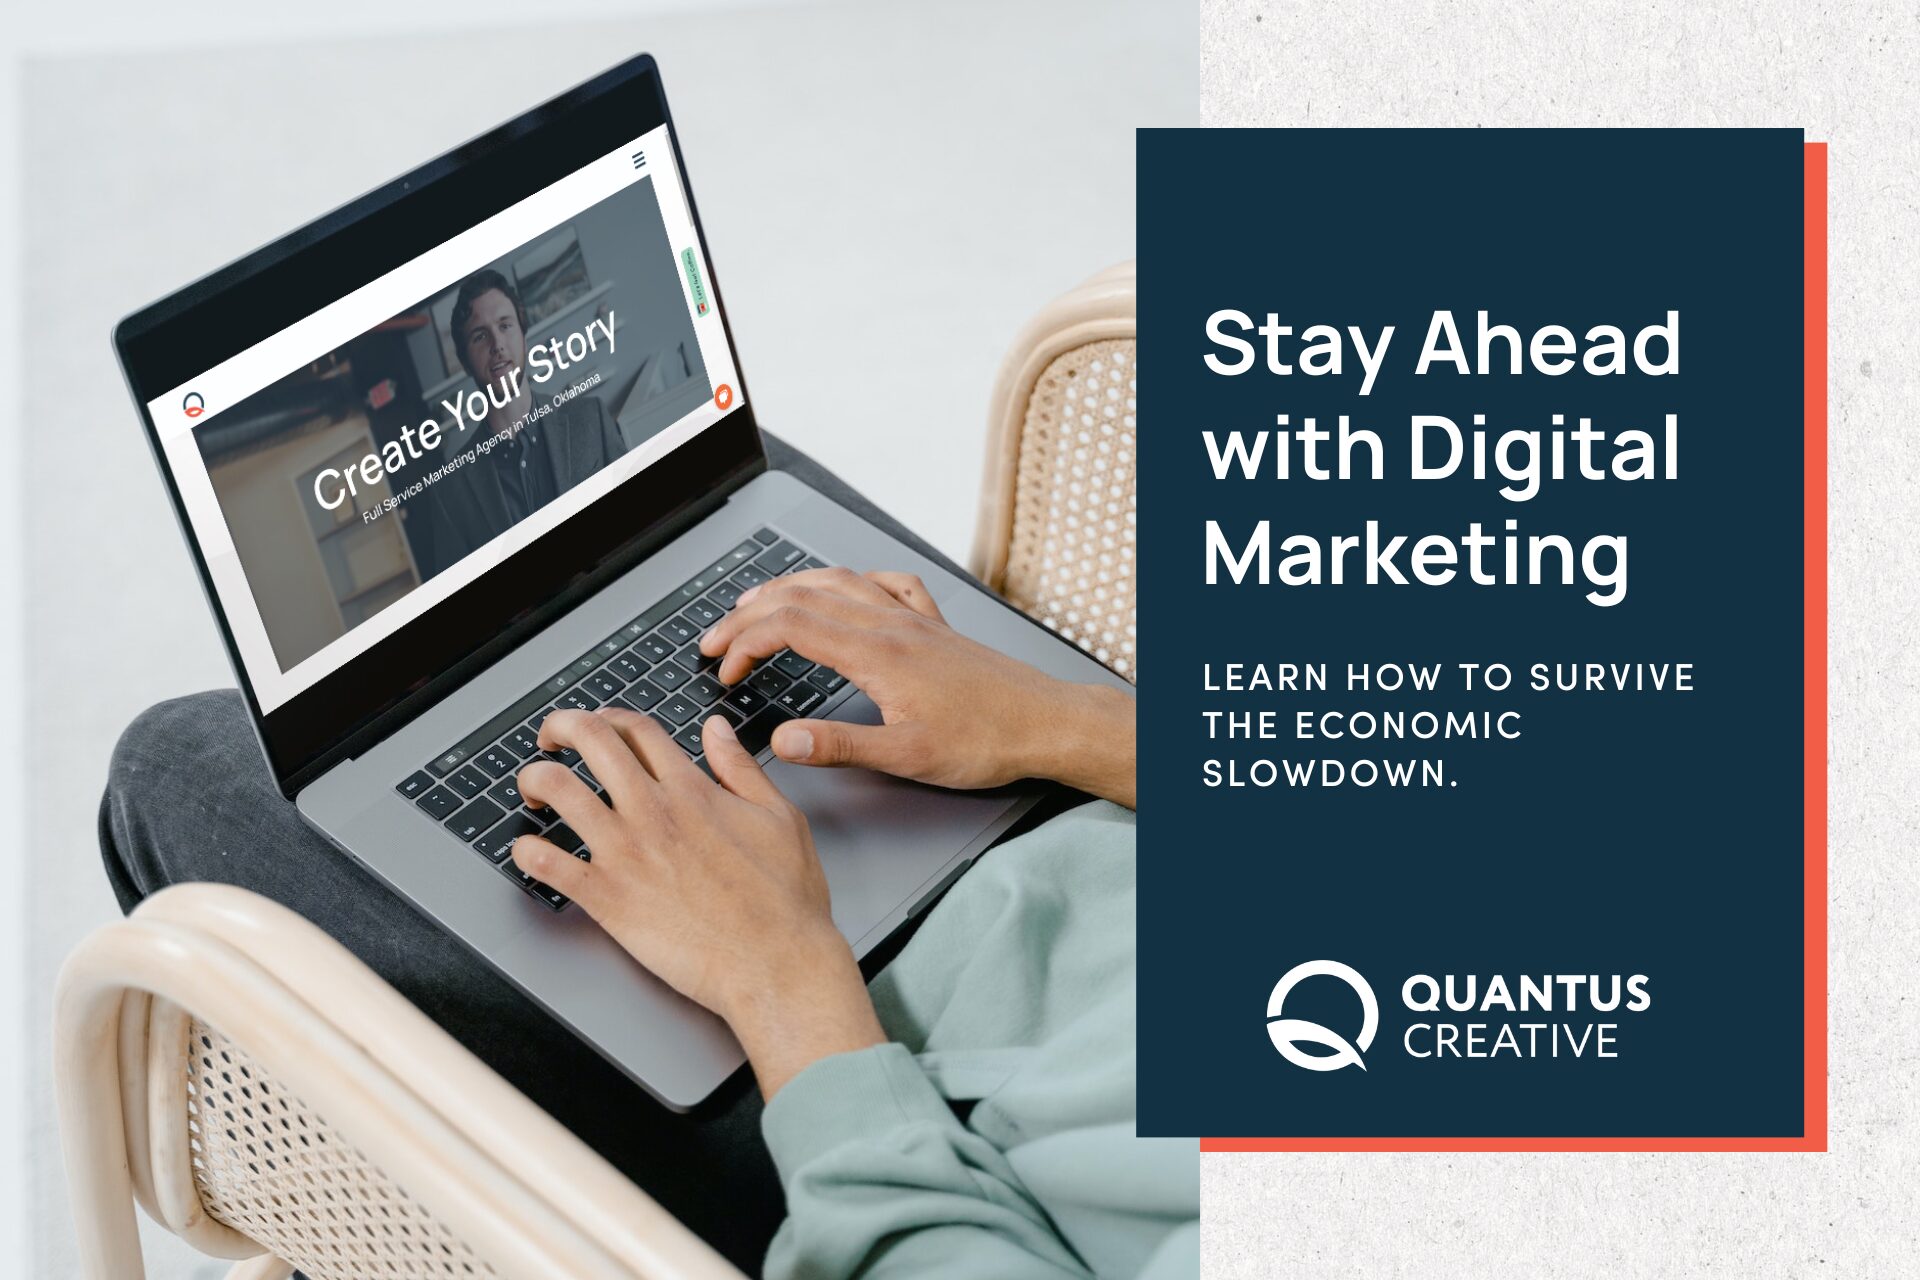 Stay Ahead with Digital Marketing